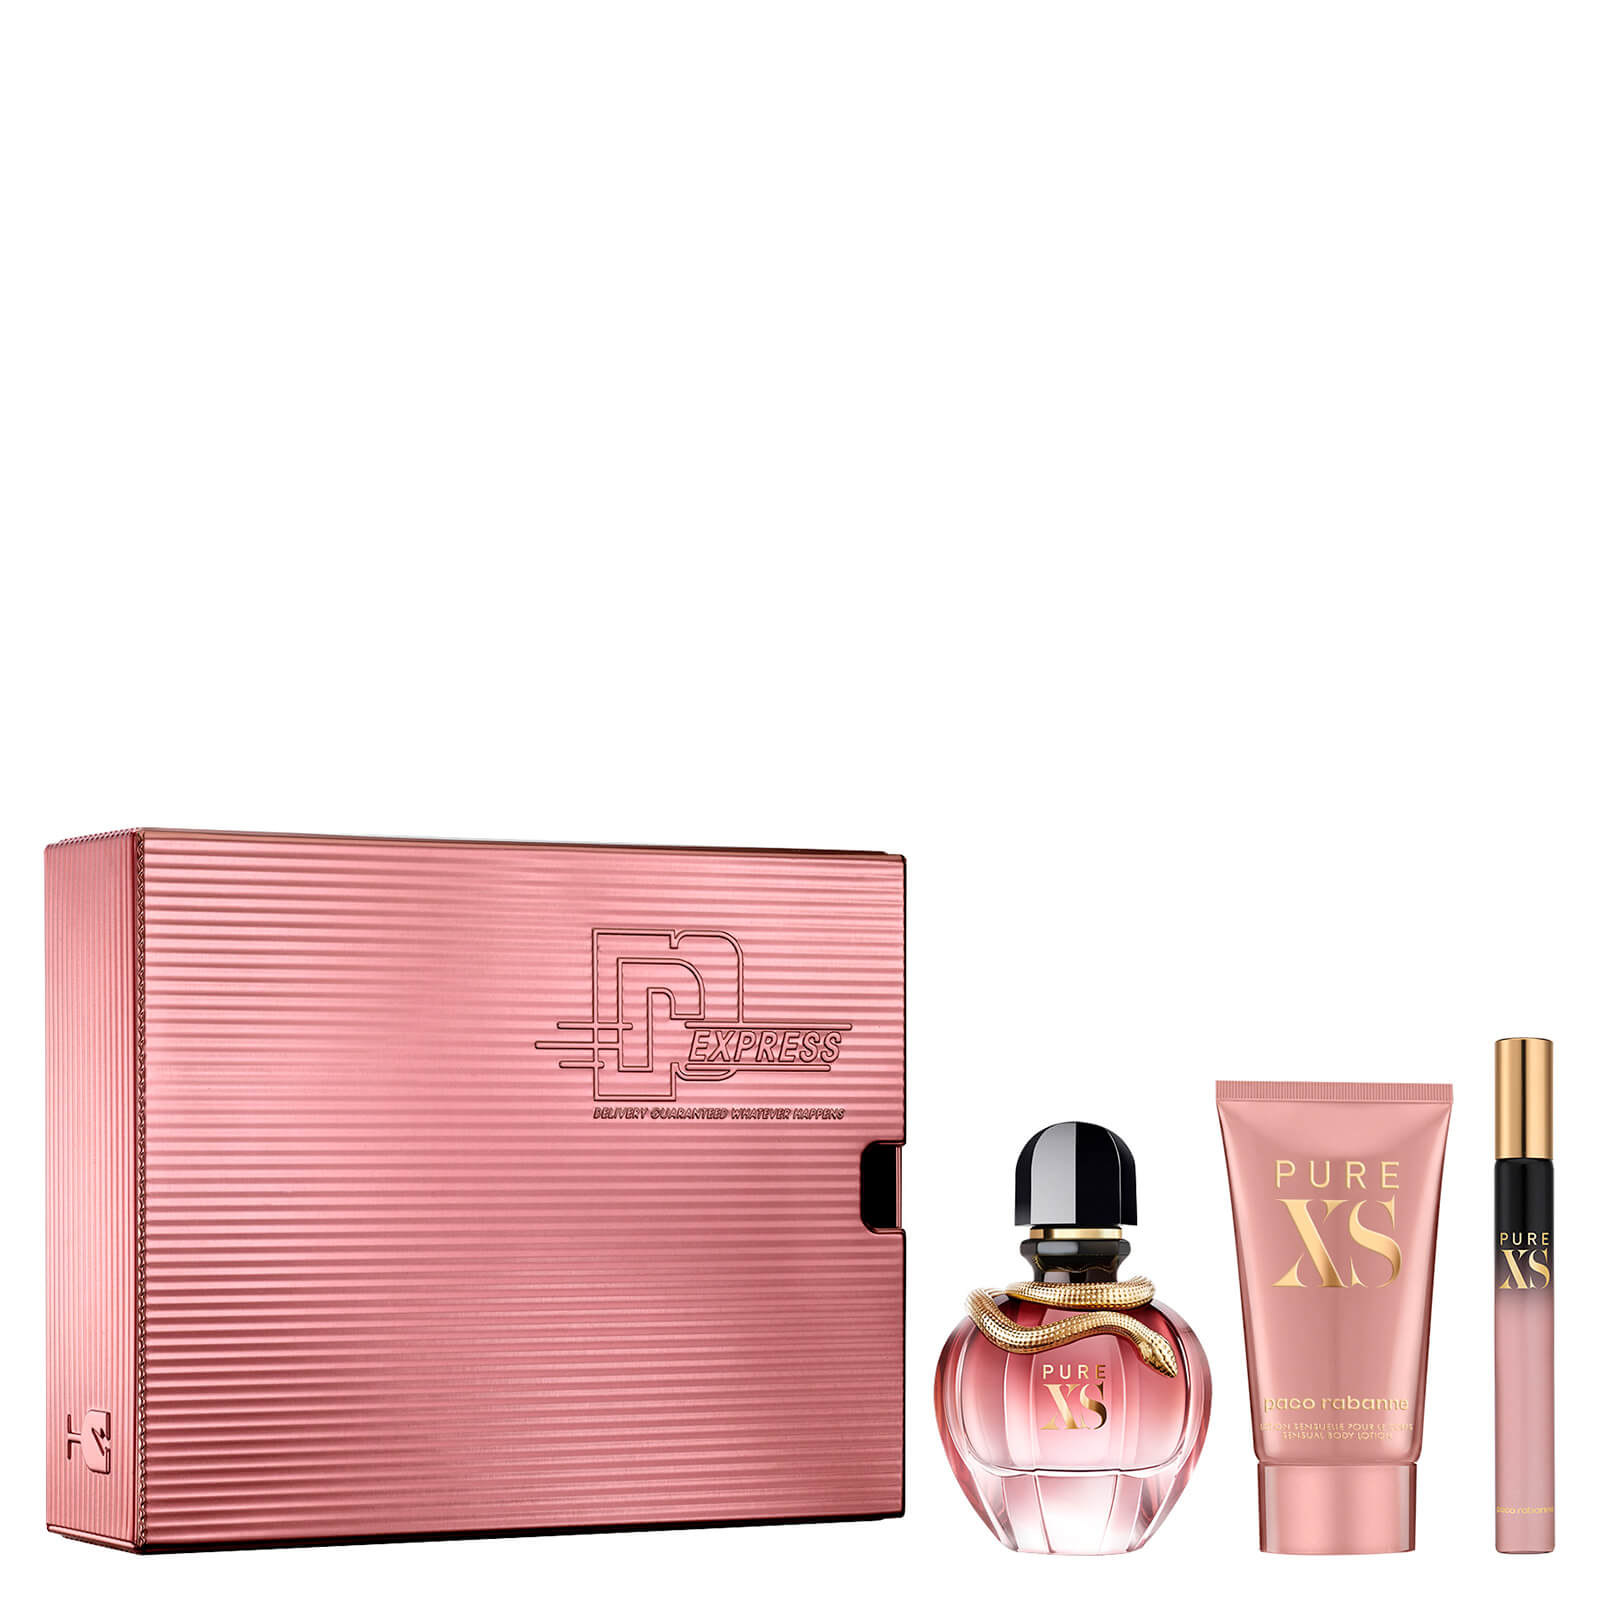 Paco Rabanne 2019 Pure XS for Her Eau De Parfum 50ml Gift Set ...